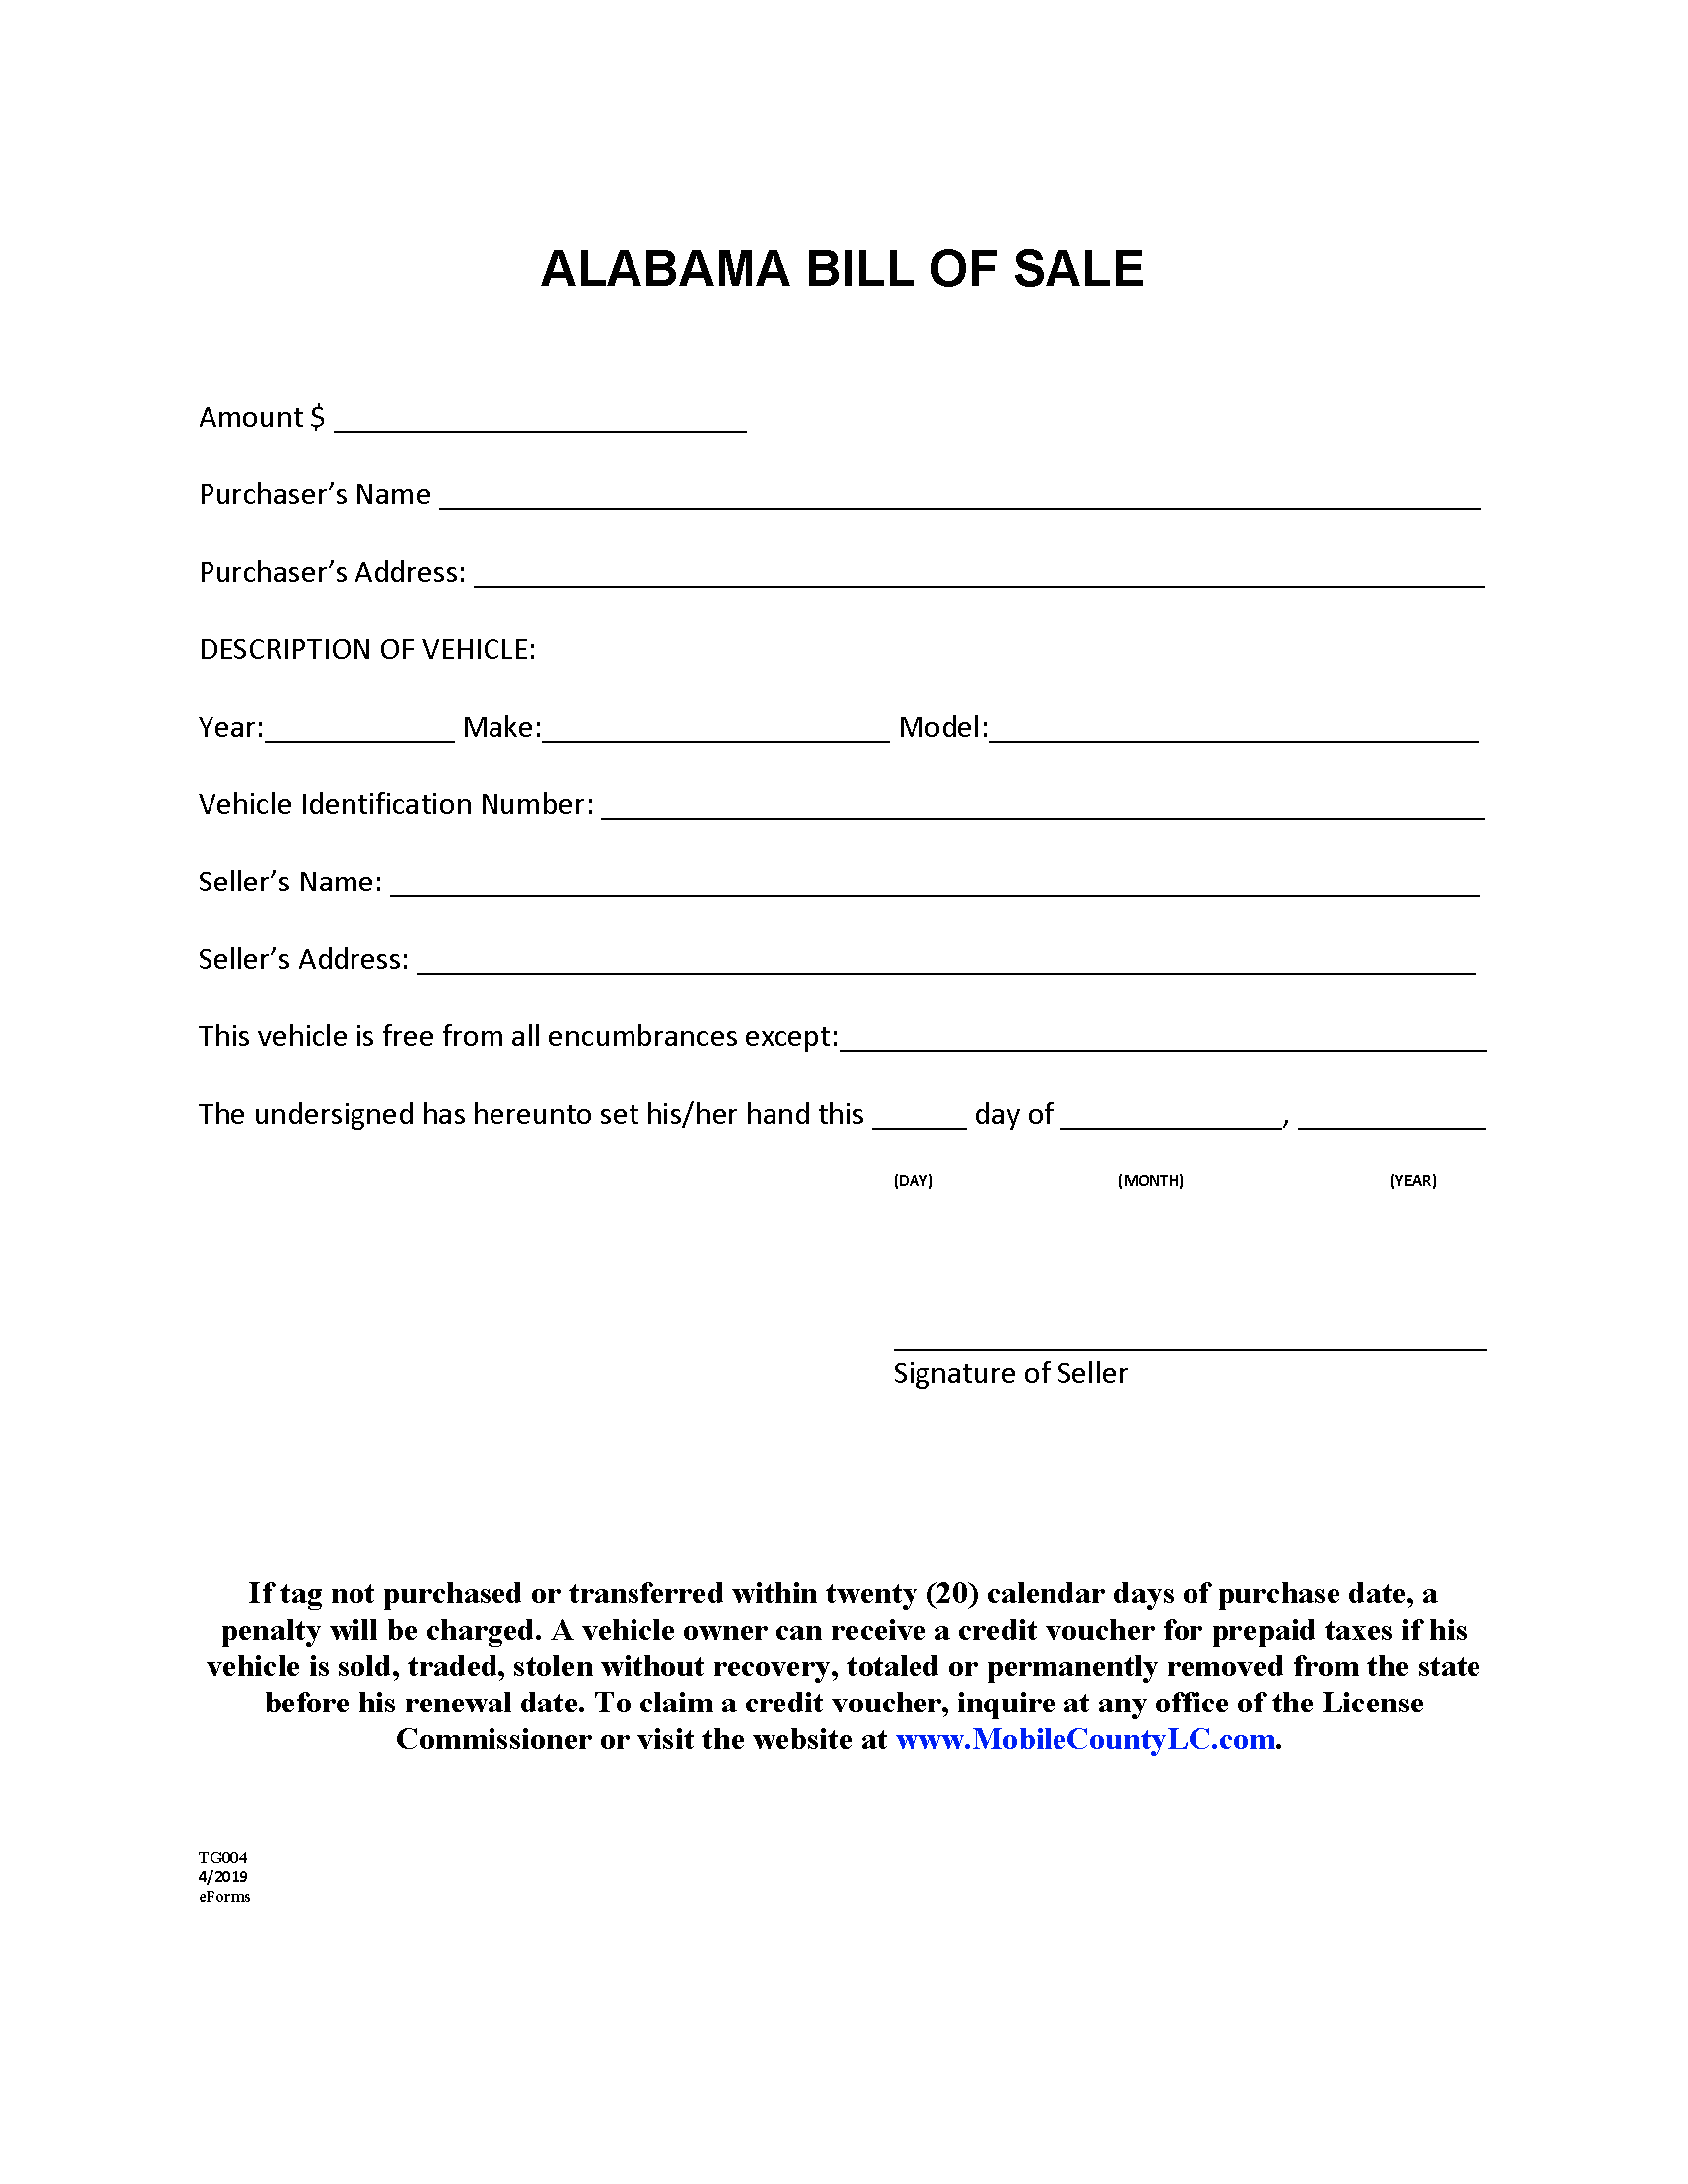 free-alabama-motor-vehicle-bill-of-sale-form-word-pdf-eforms